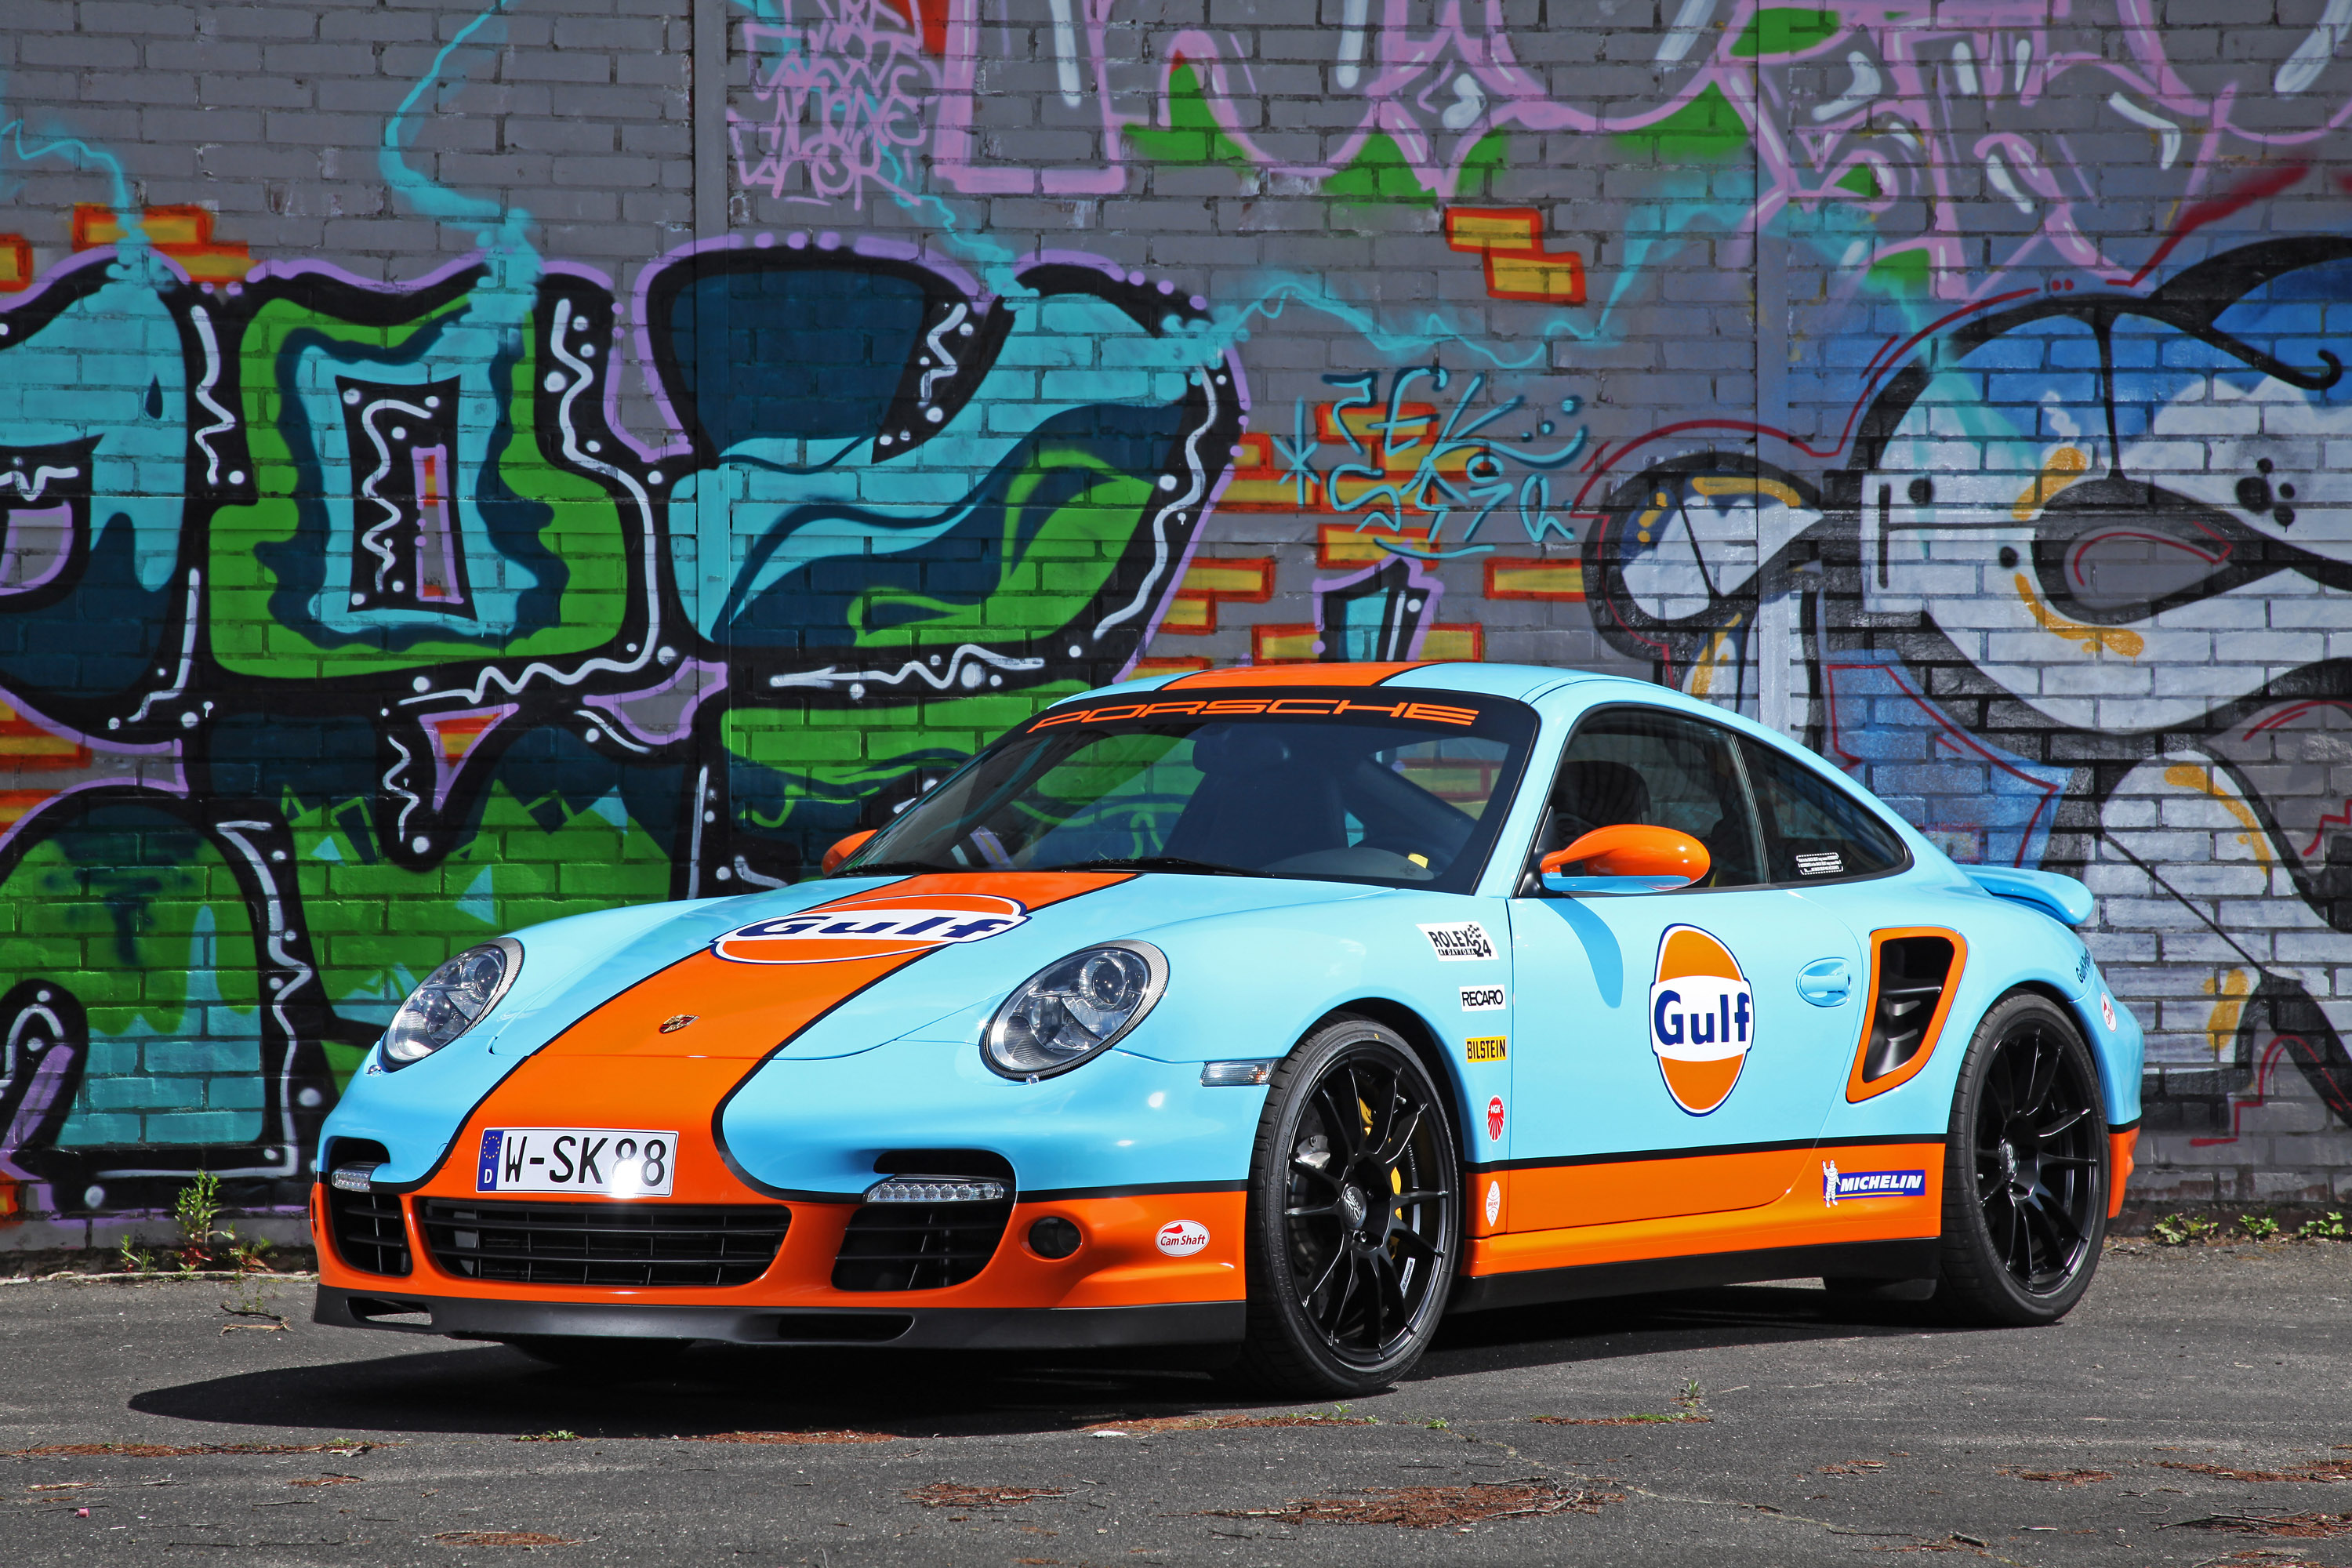 2013, Cam shaft, Porsche, 997, Turbo, Supercar, Supercars Wallpaper